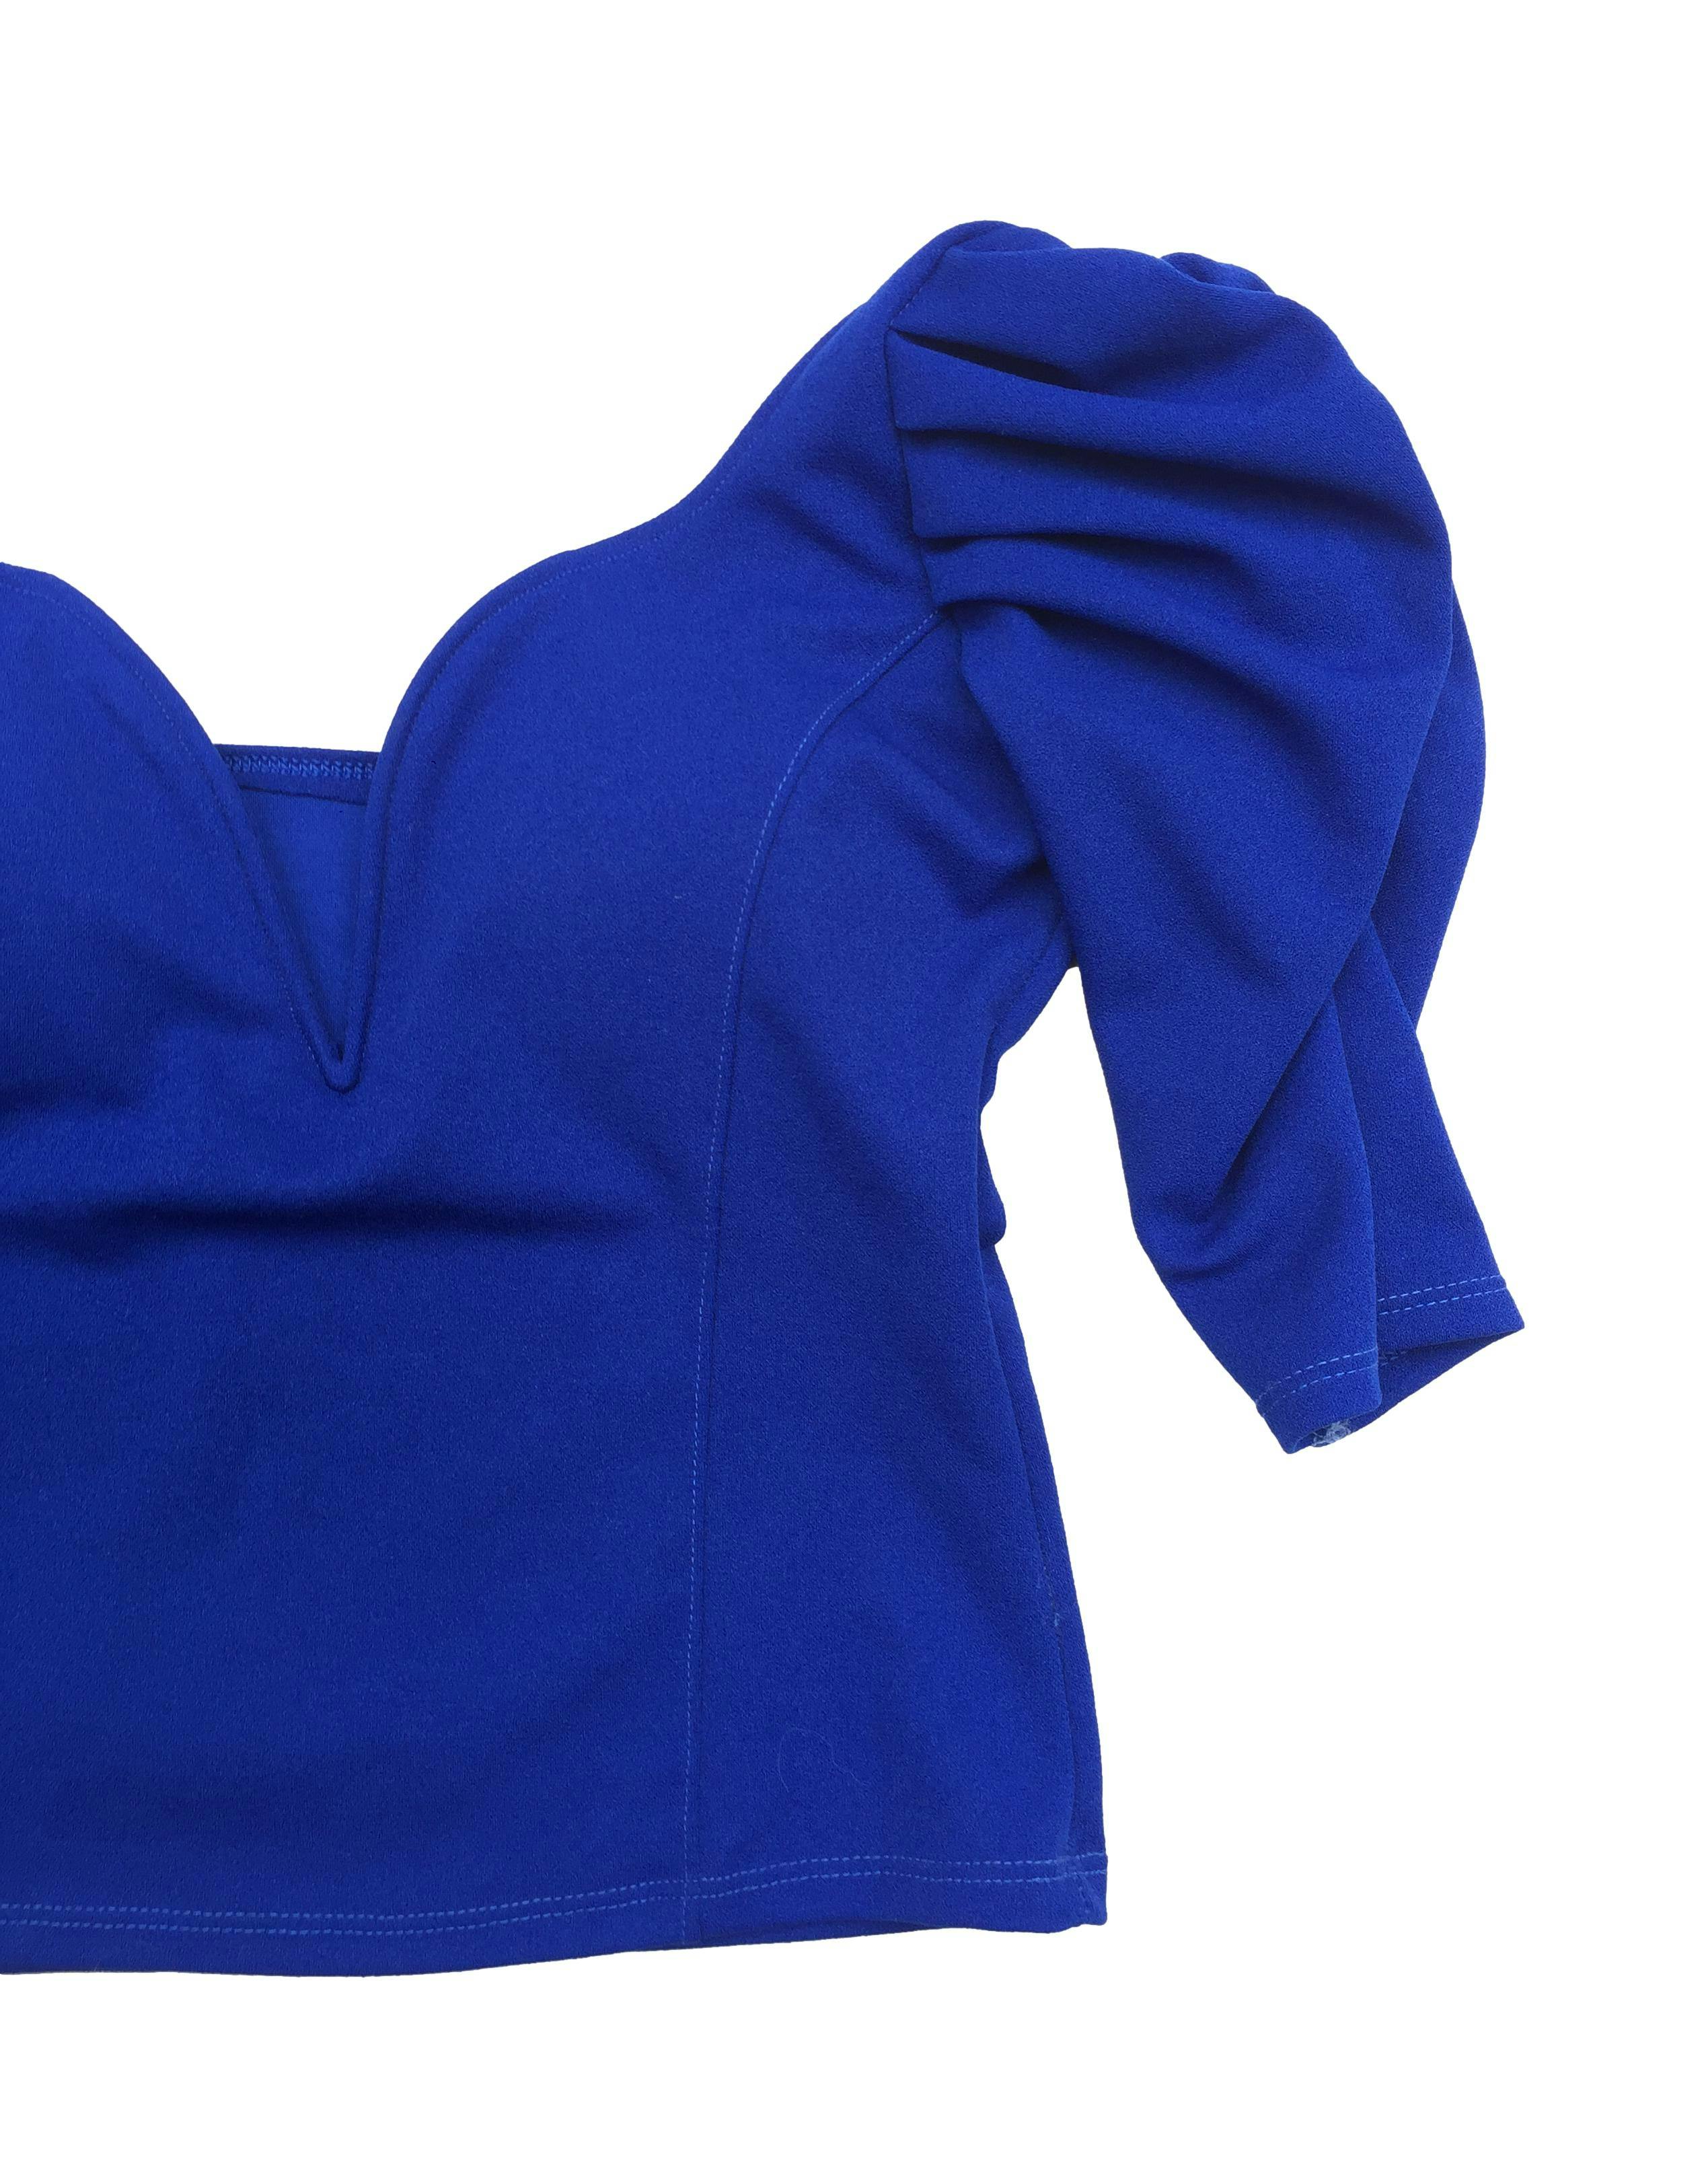 Blusa azul escote corazón con copas, mangas 3/4 ligeramente abullonadas, es stretch. Busto: 90cm, Largo: 45cm